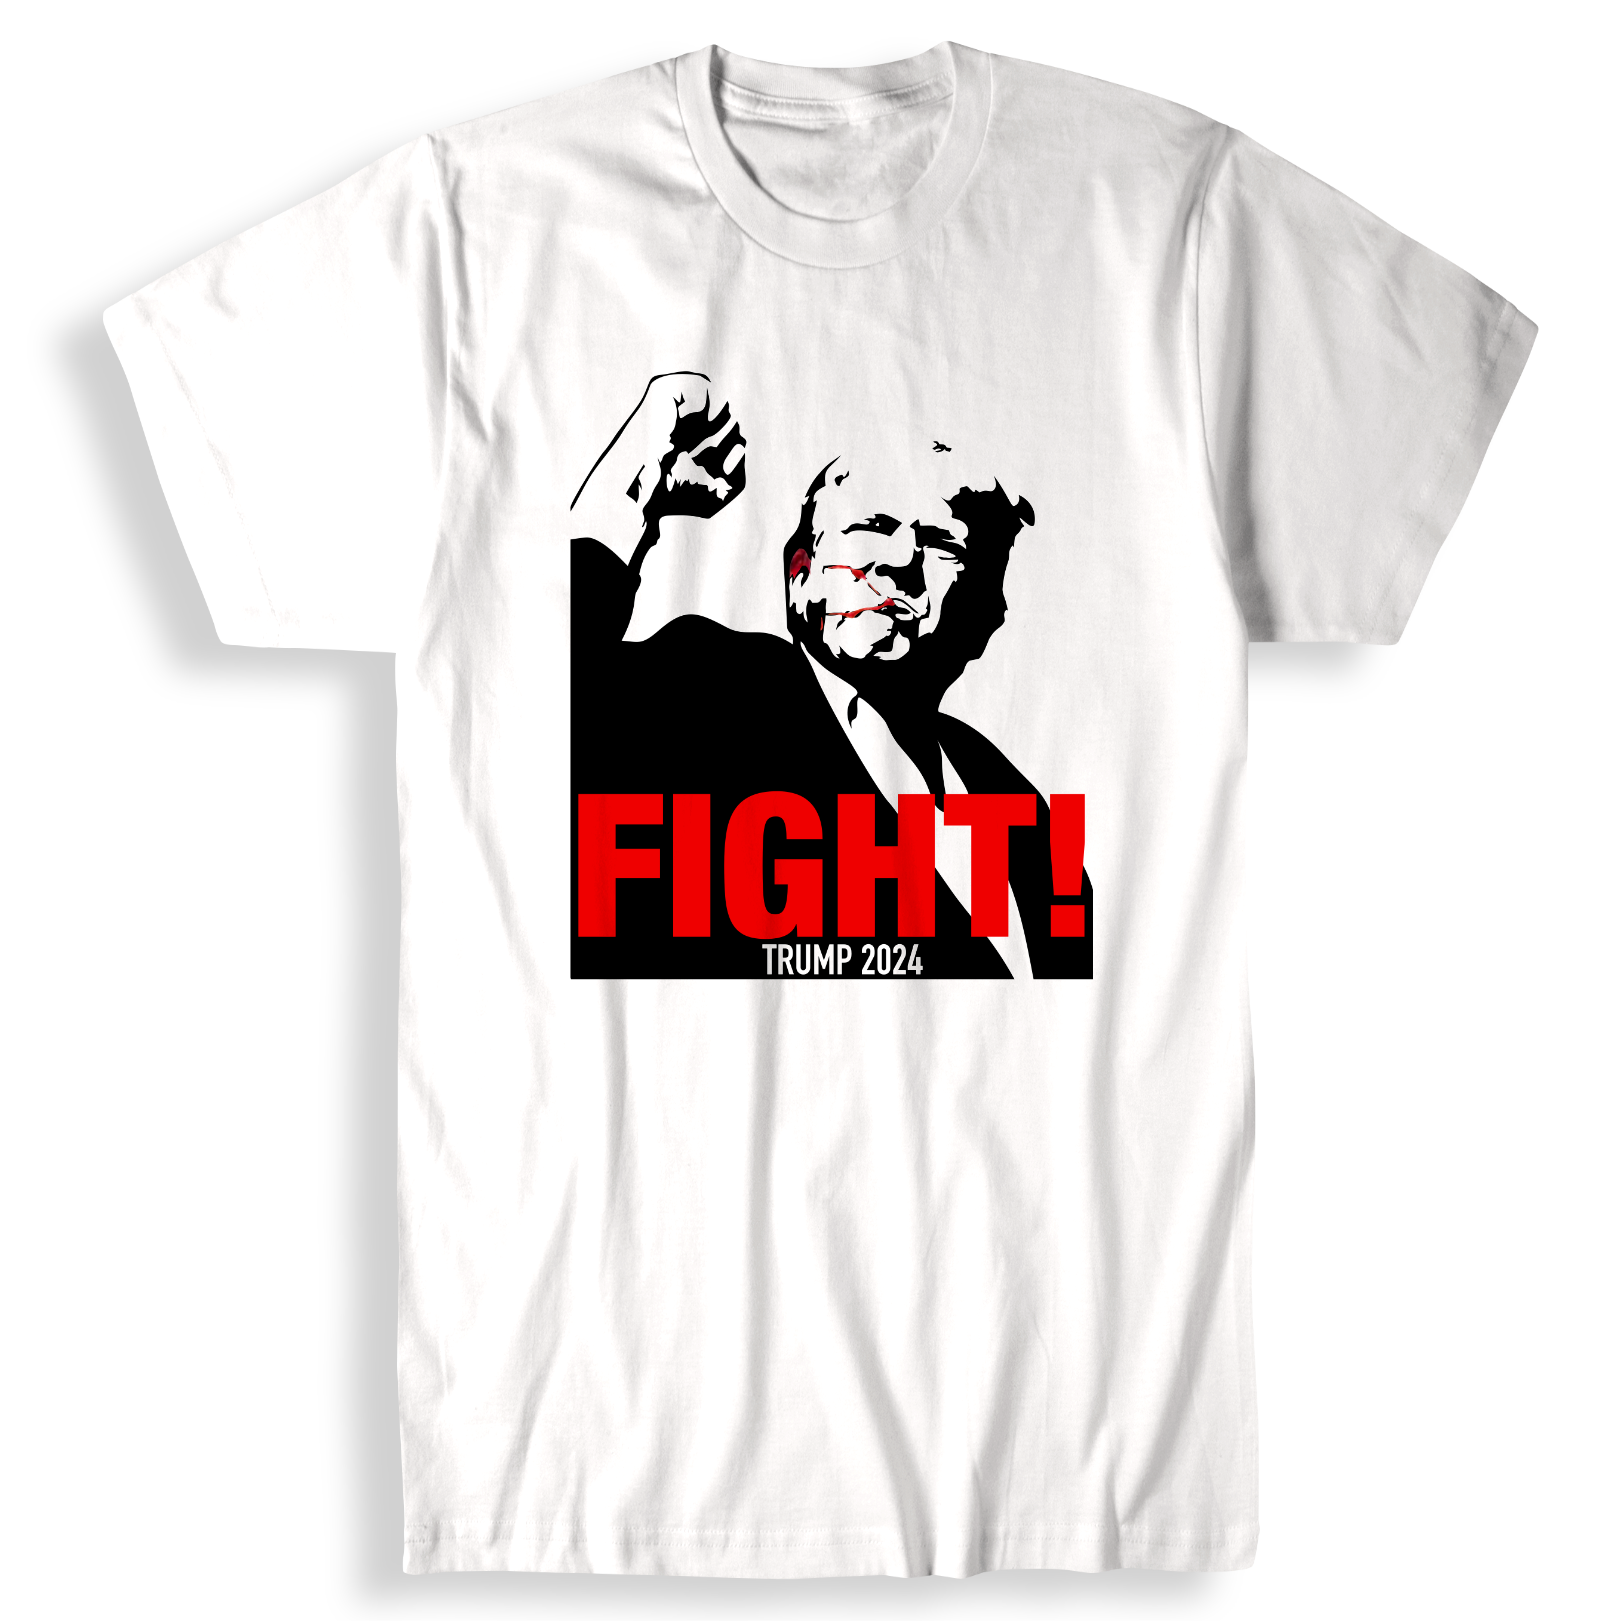 FIGHT! T-Shirt